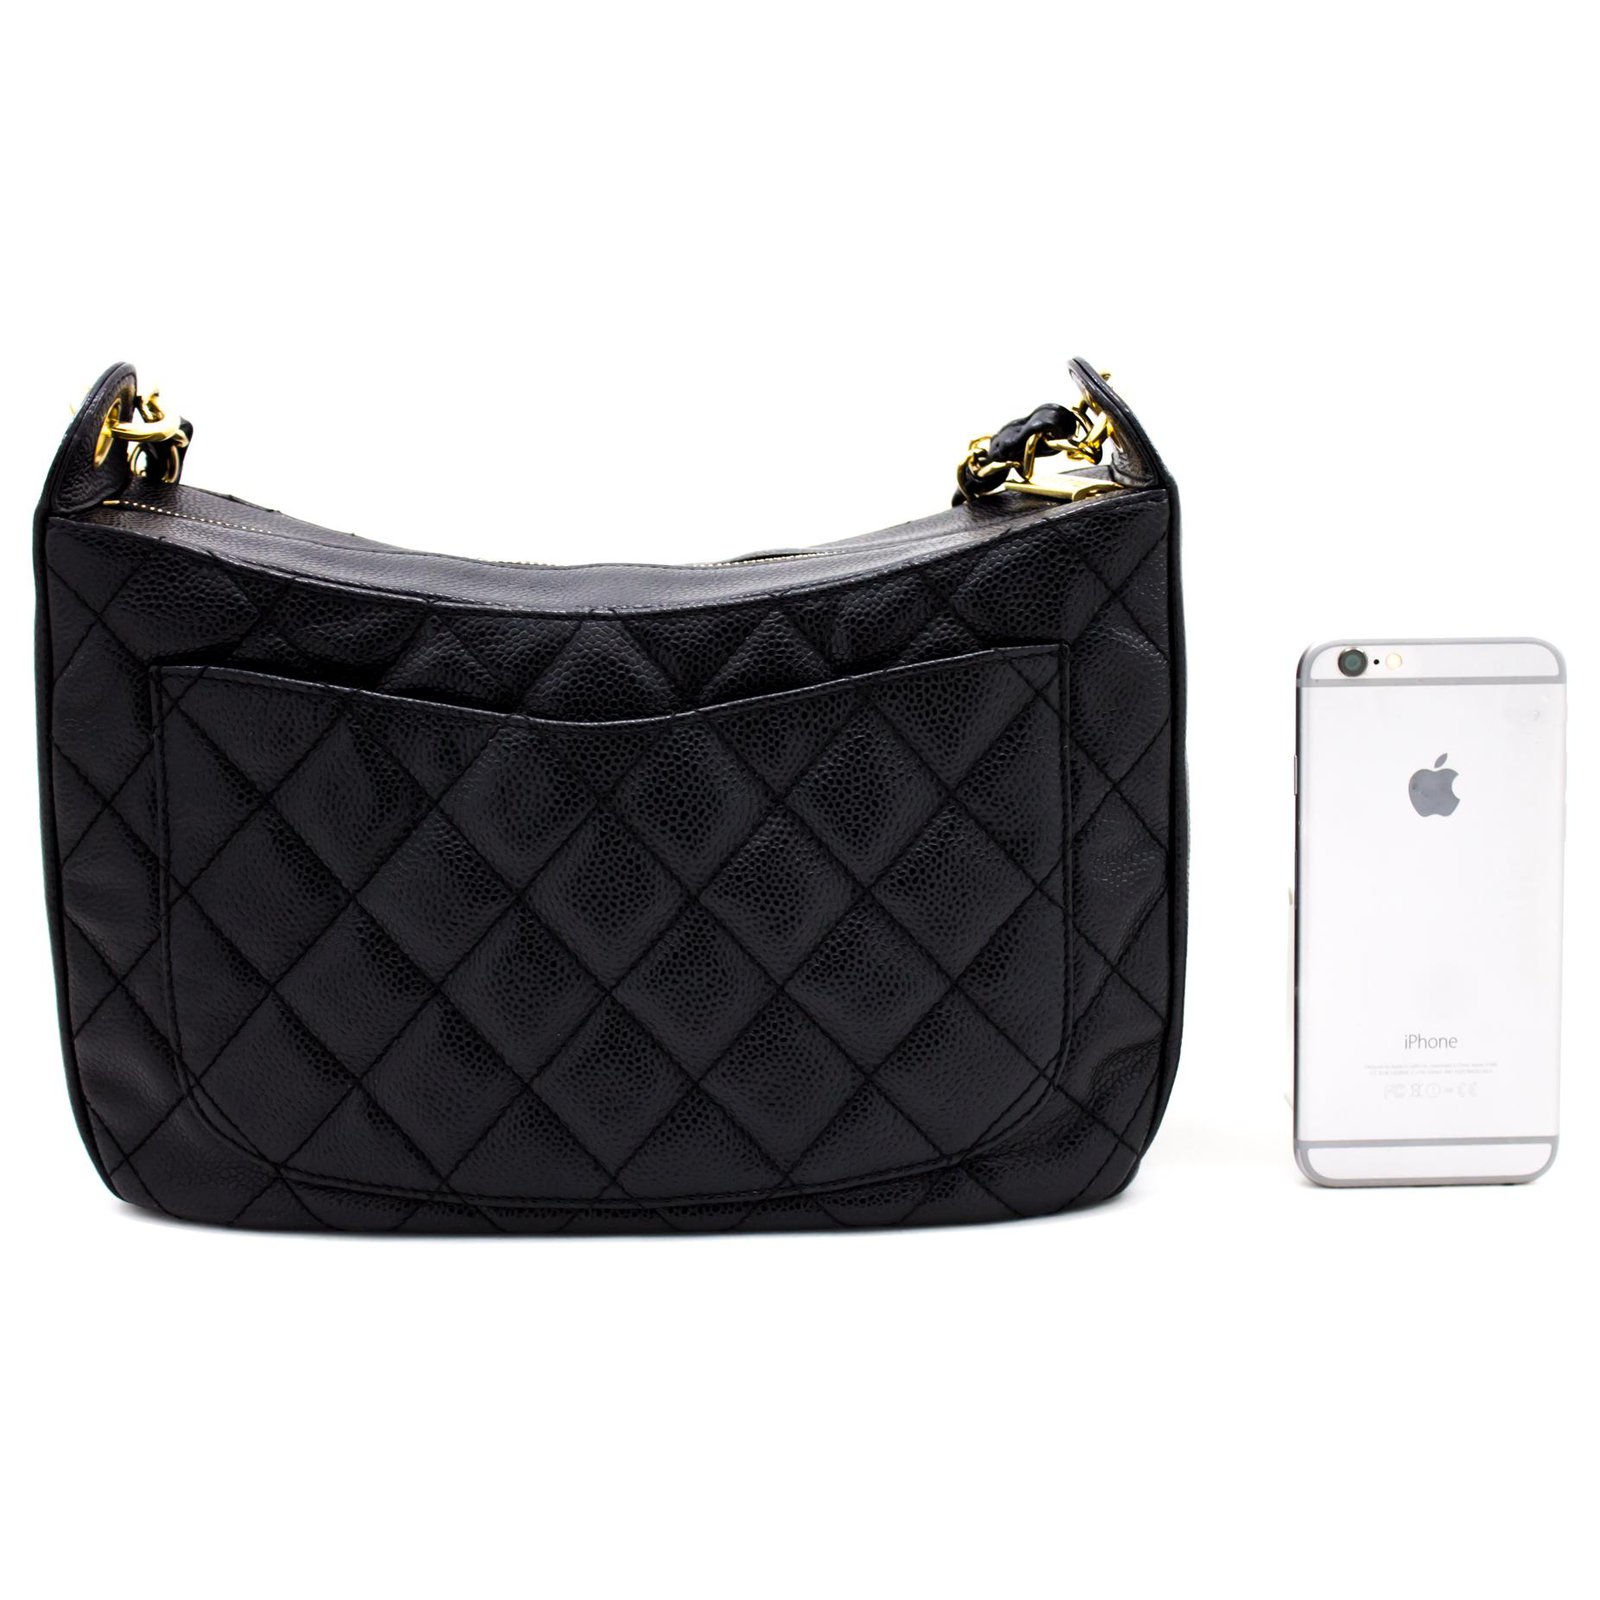 chanel black satchel handbag